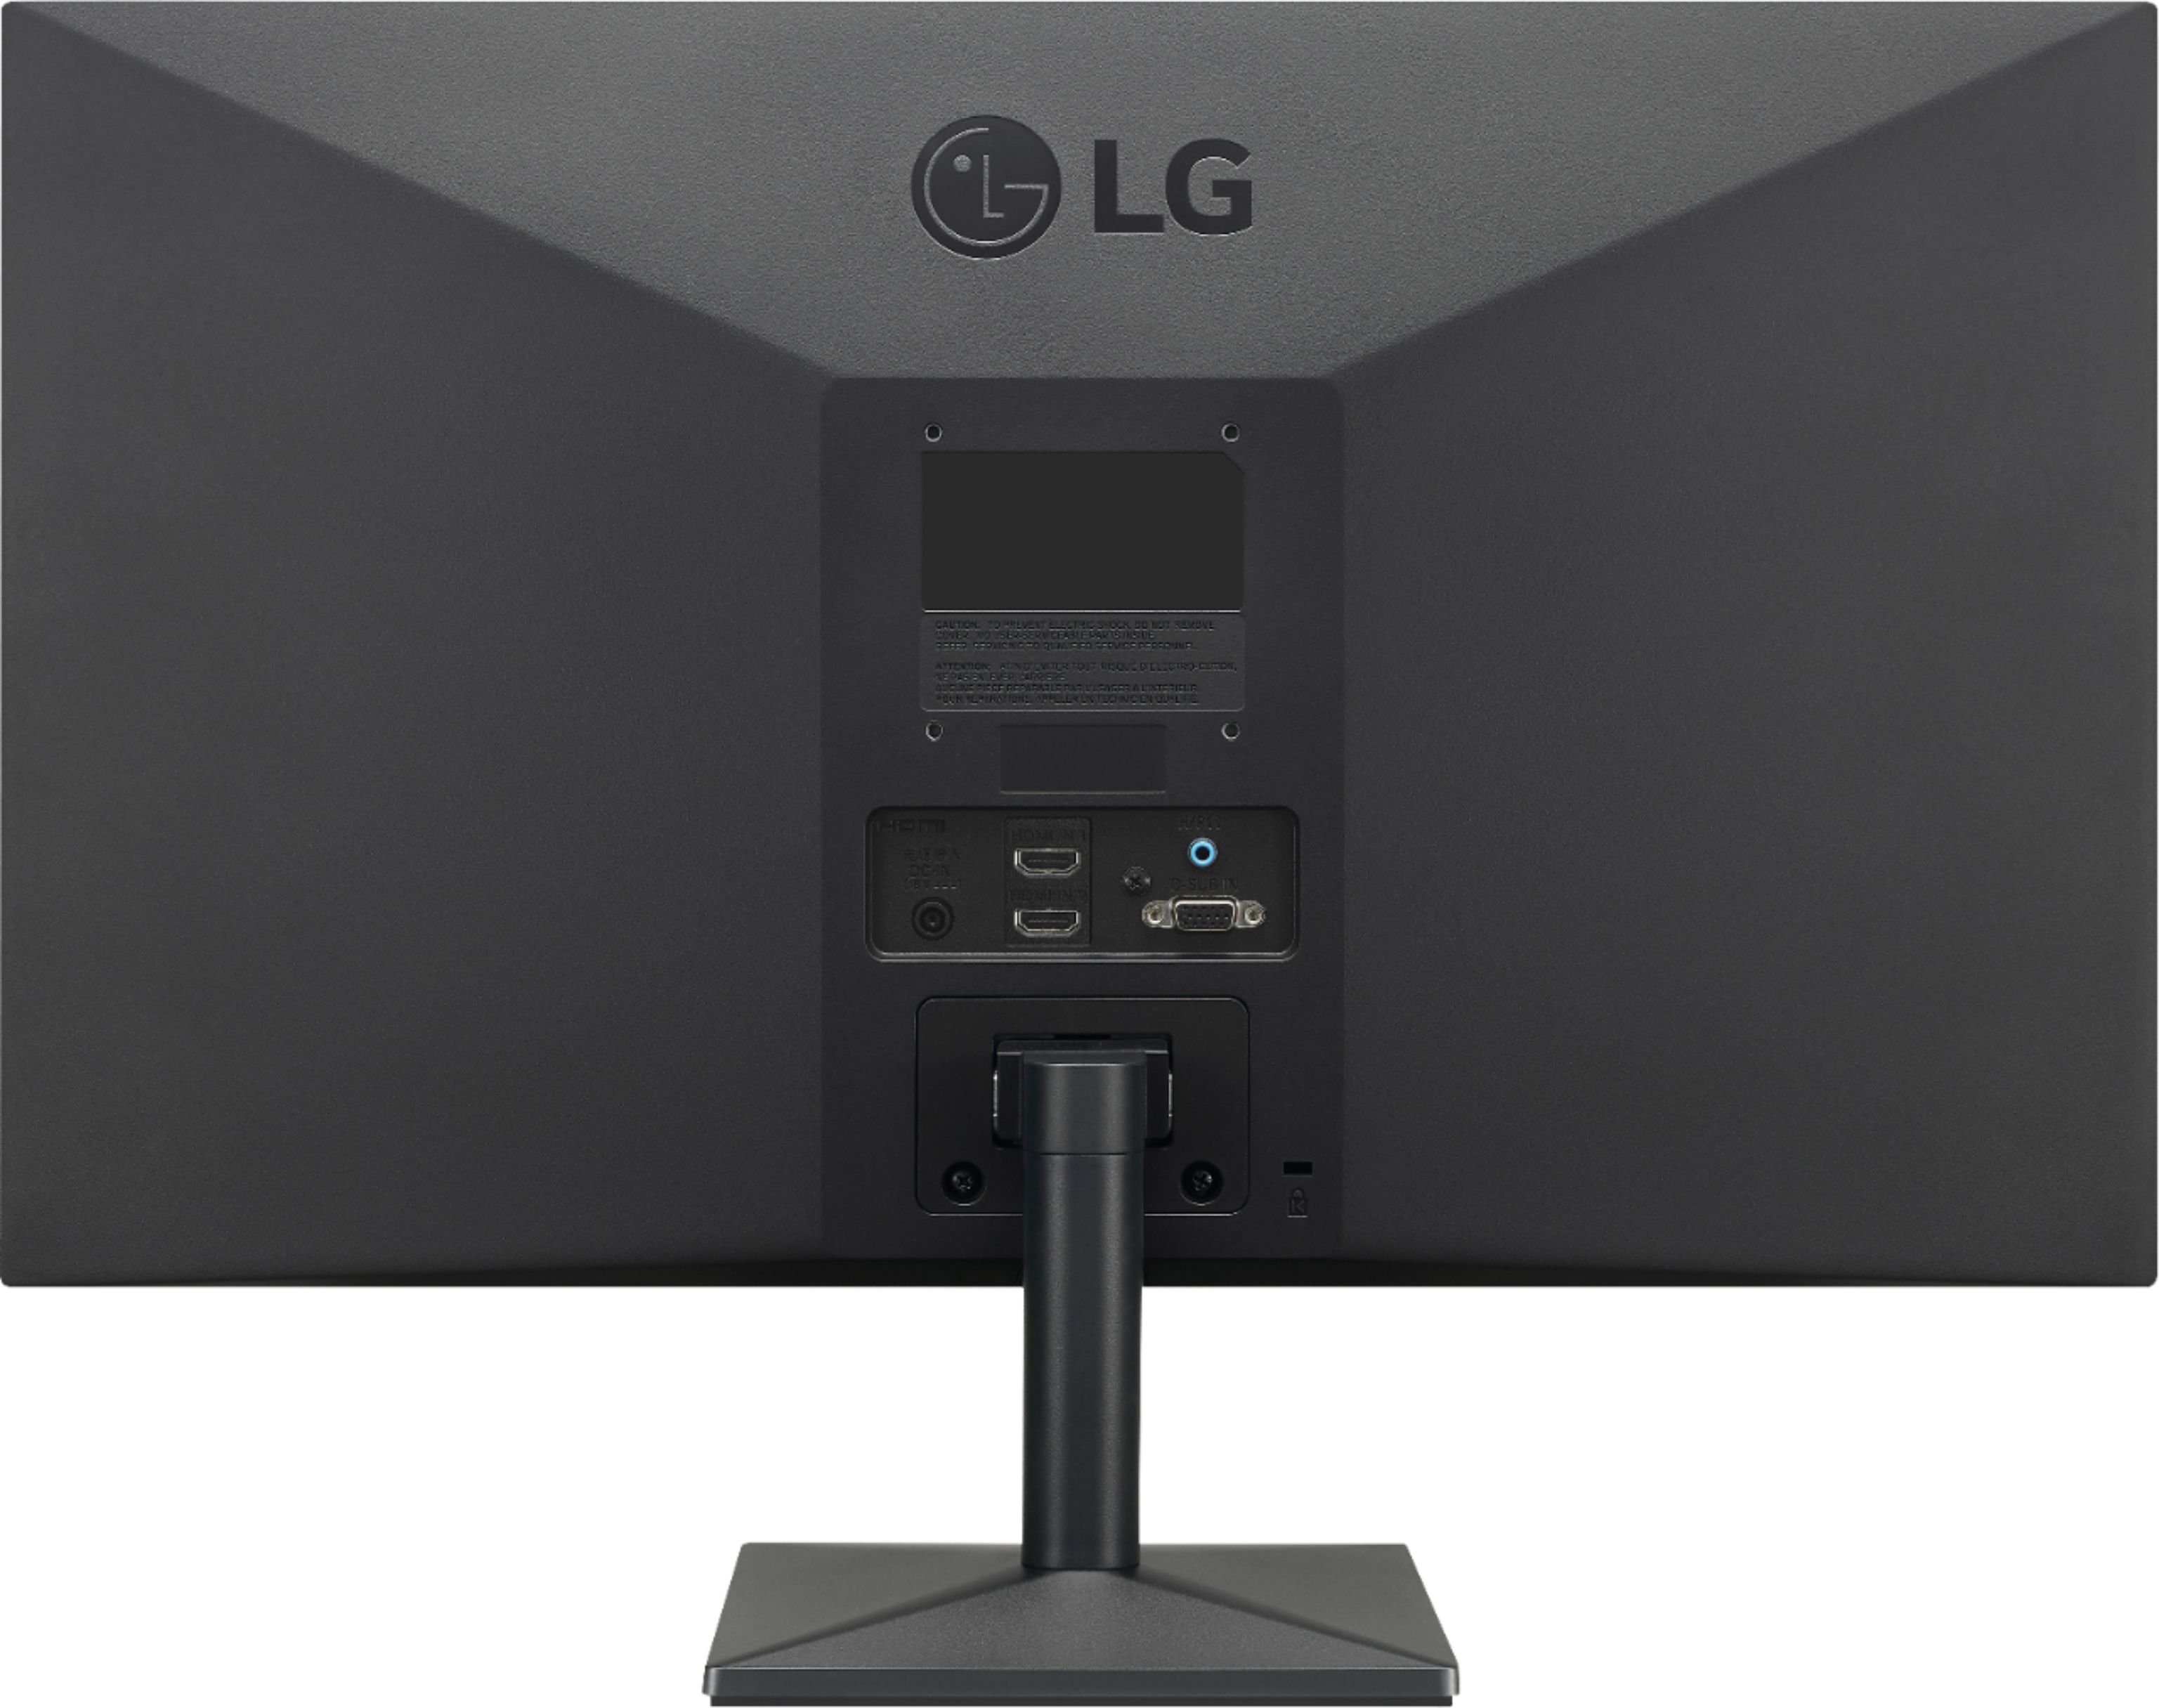 Back View: LG - 24" IPS LED FHD FreeSync Monitor (HDMI, VGA) - Black